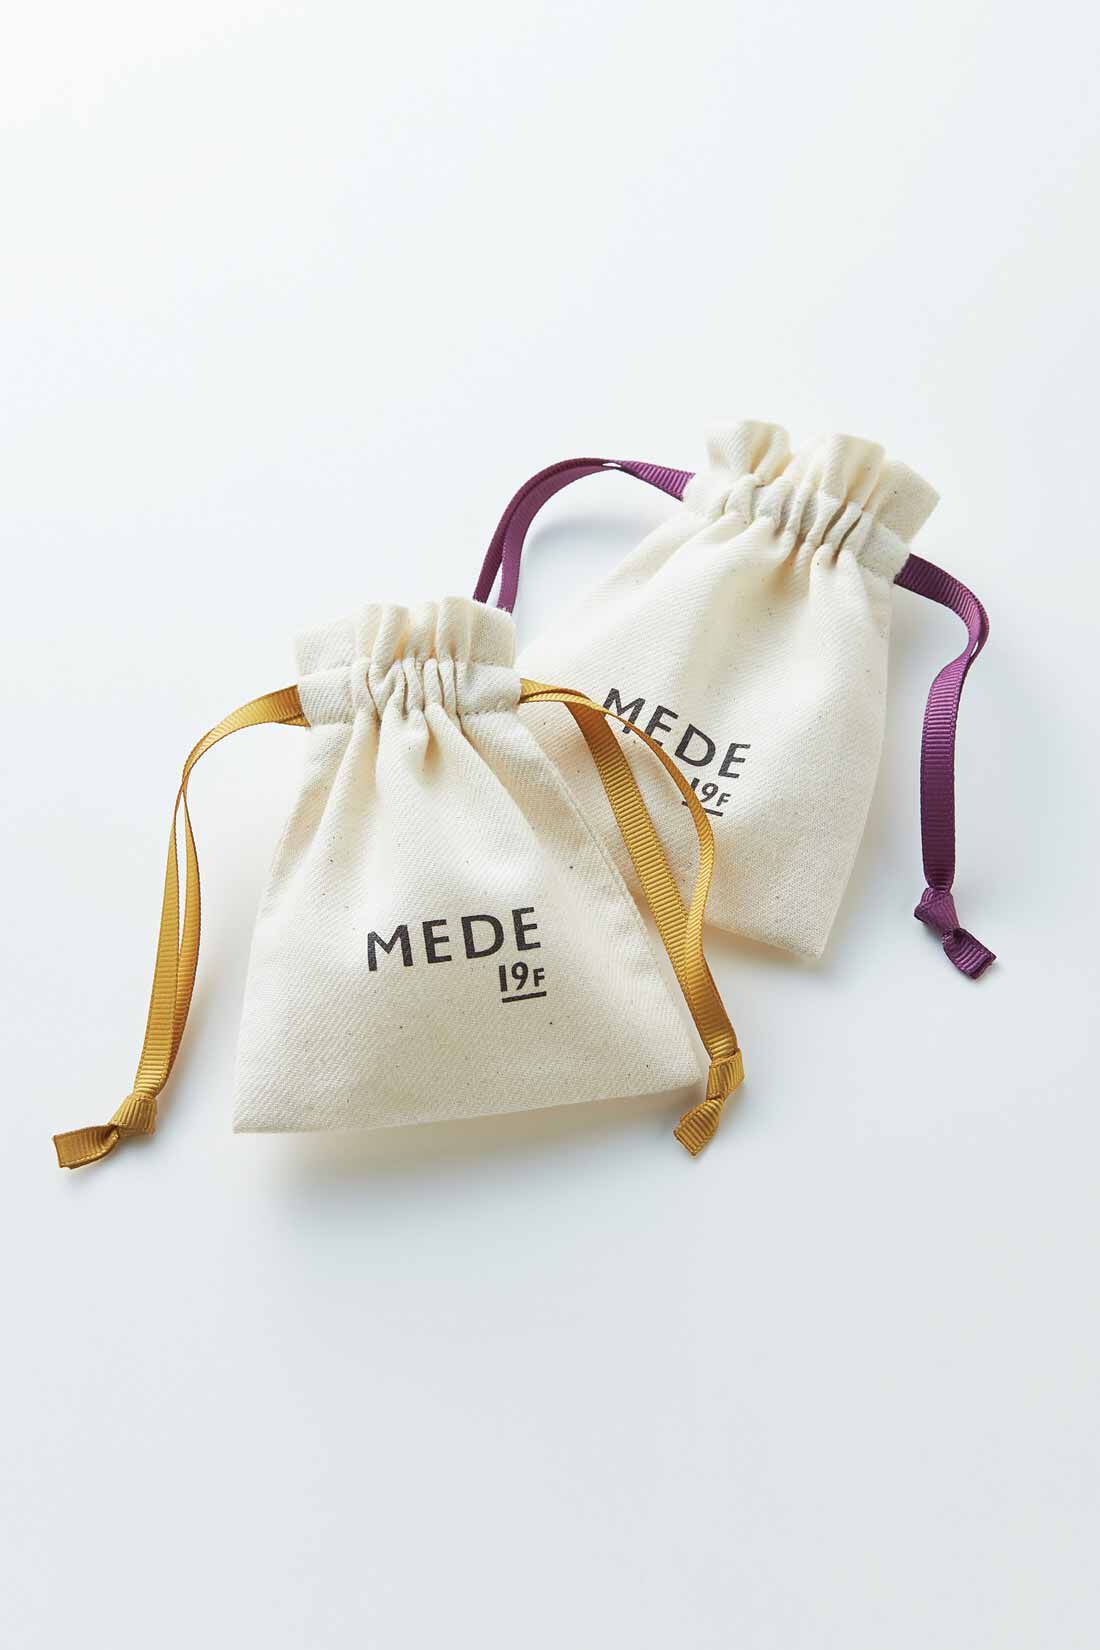 MEDE19F|YPAC for MEDE19F　フランス製陶器ボタンイヤリング type.06|MEDE19Fオリジナルきんちゃくに入れてお届けします。